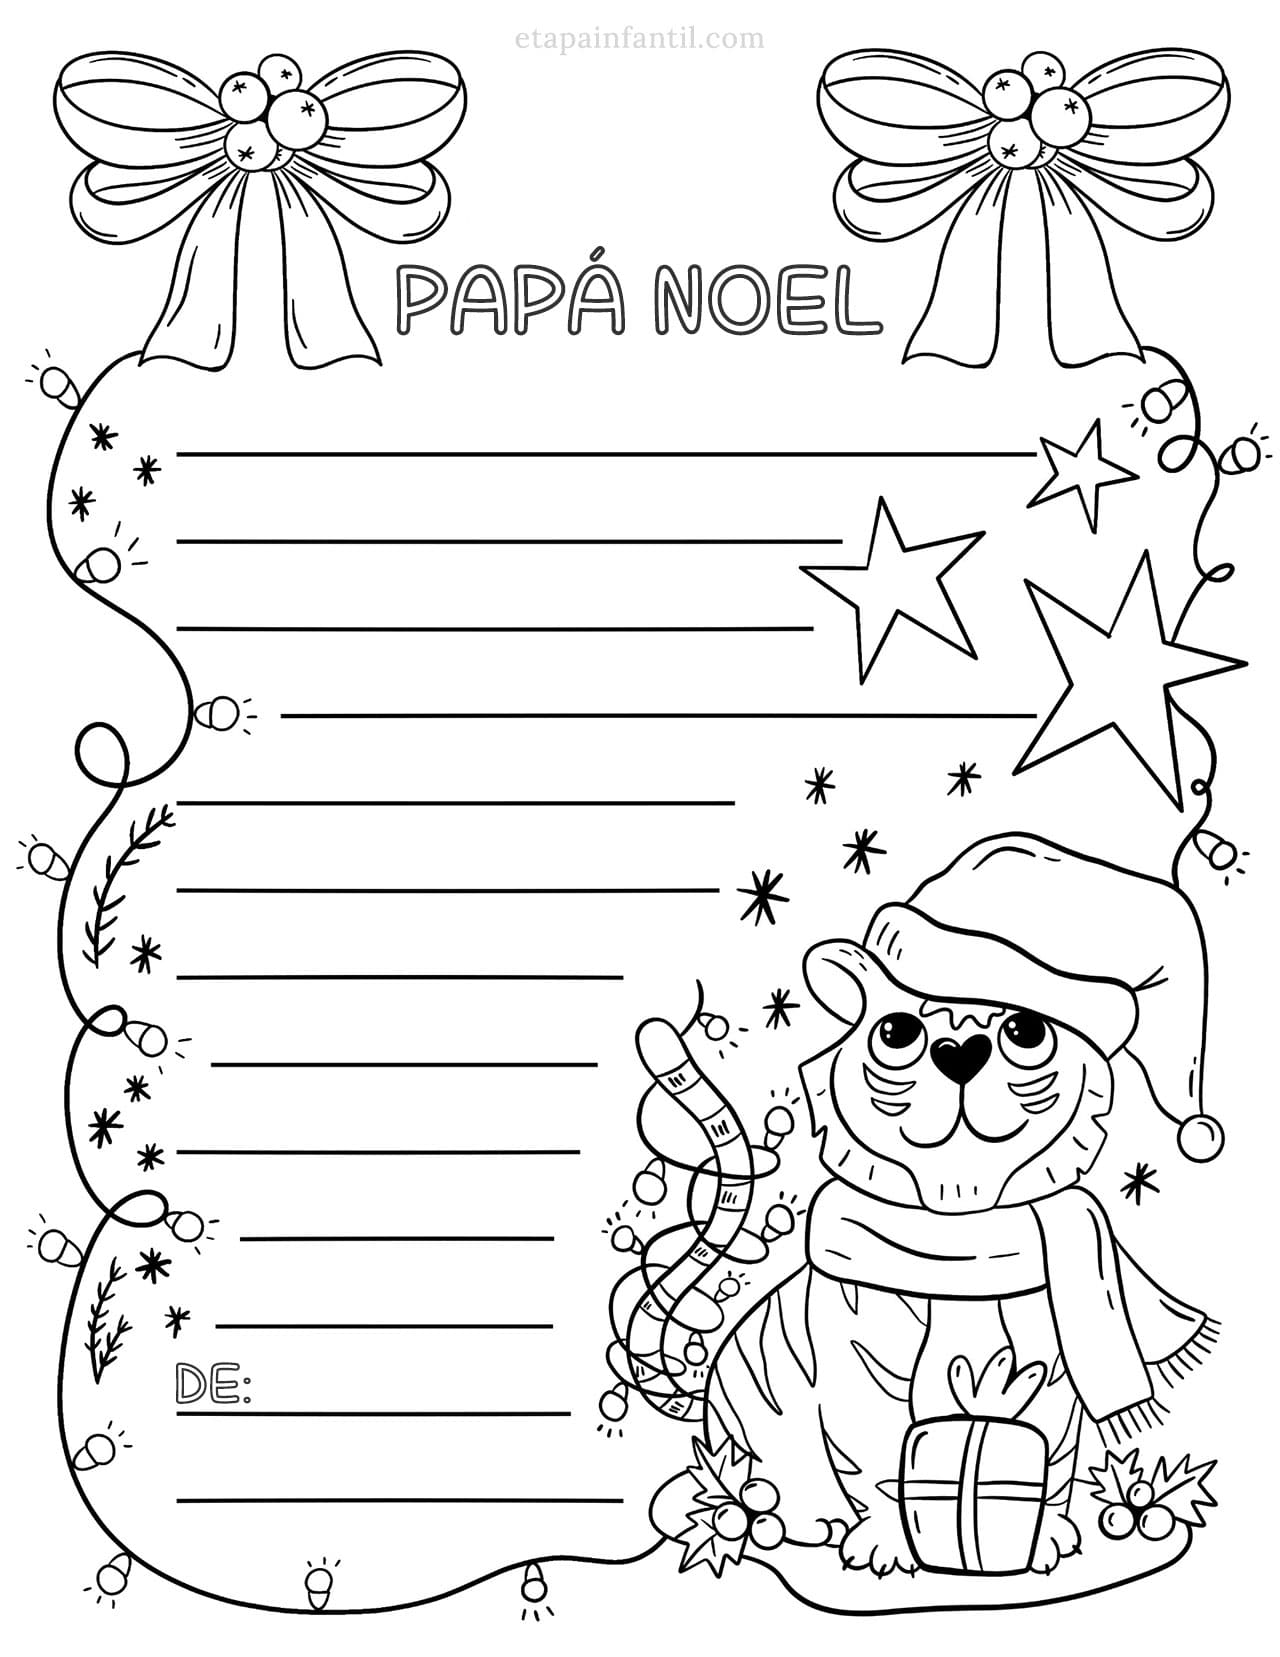 Carta de mascota para Papa Noel para colorear